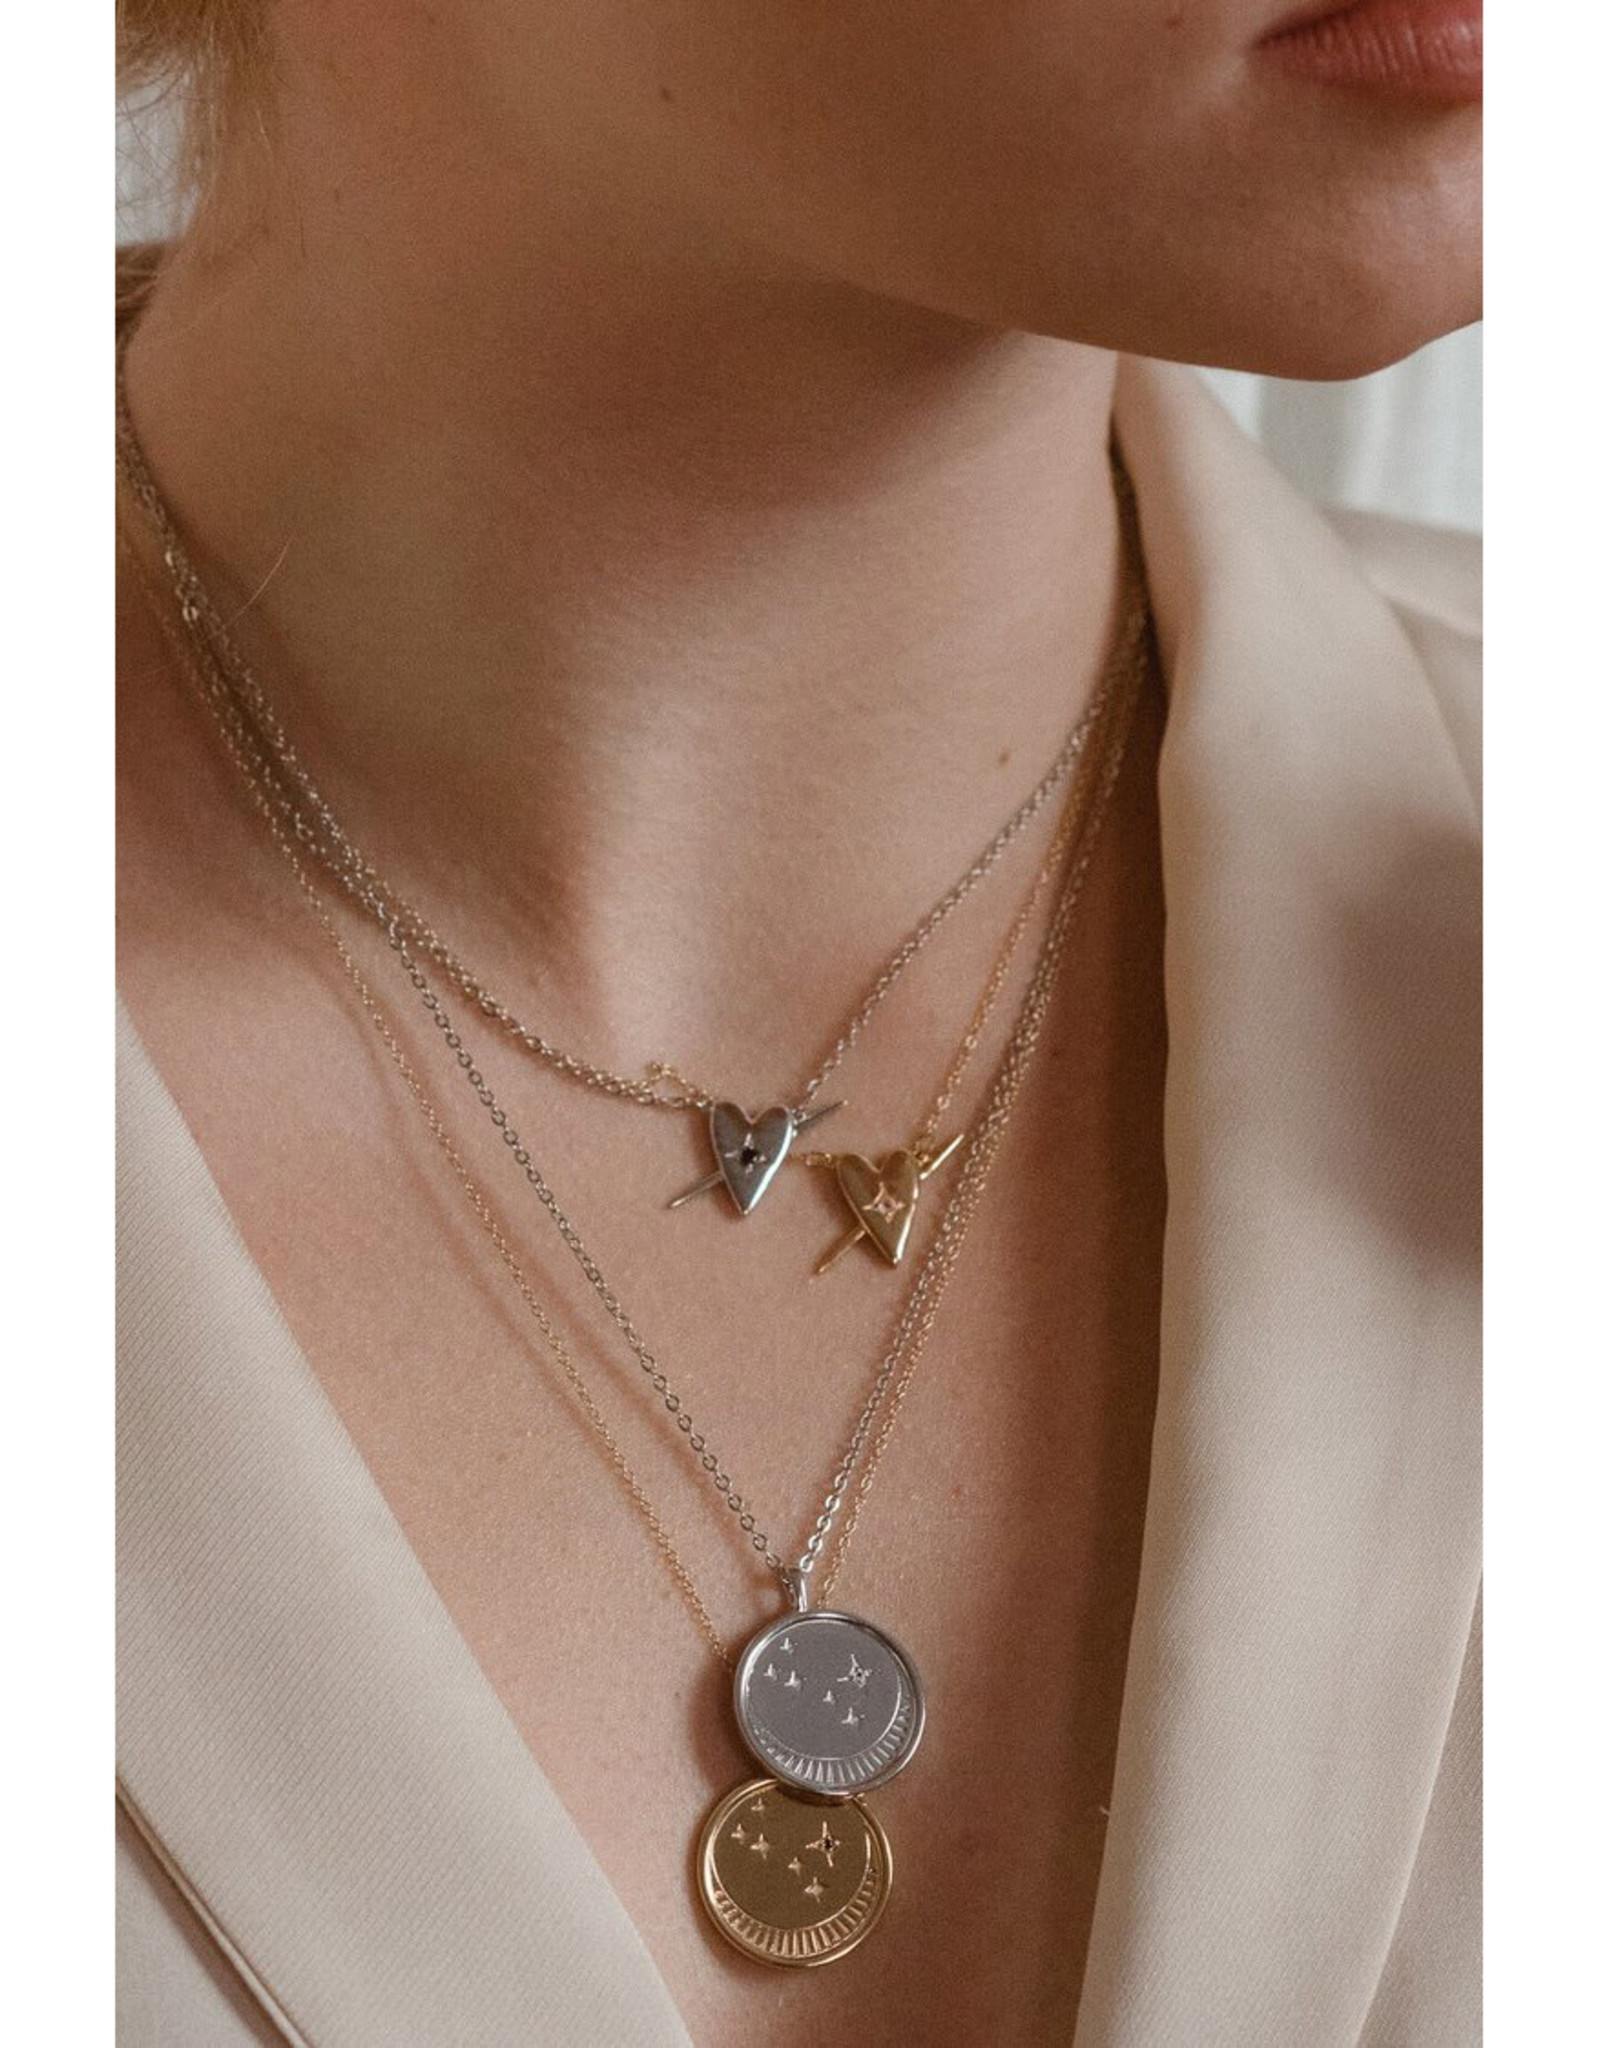 Sarah Mulder Jewelry Silver Franz Necklace - Onyx